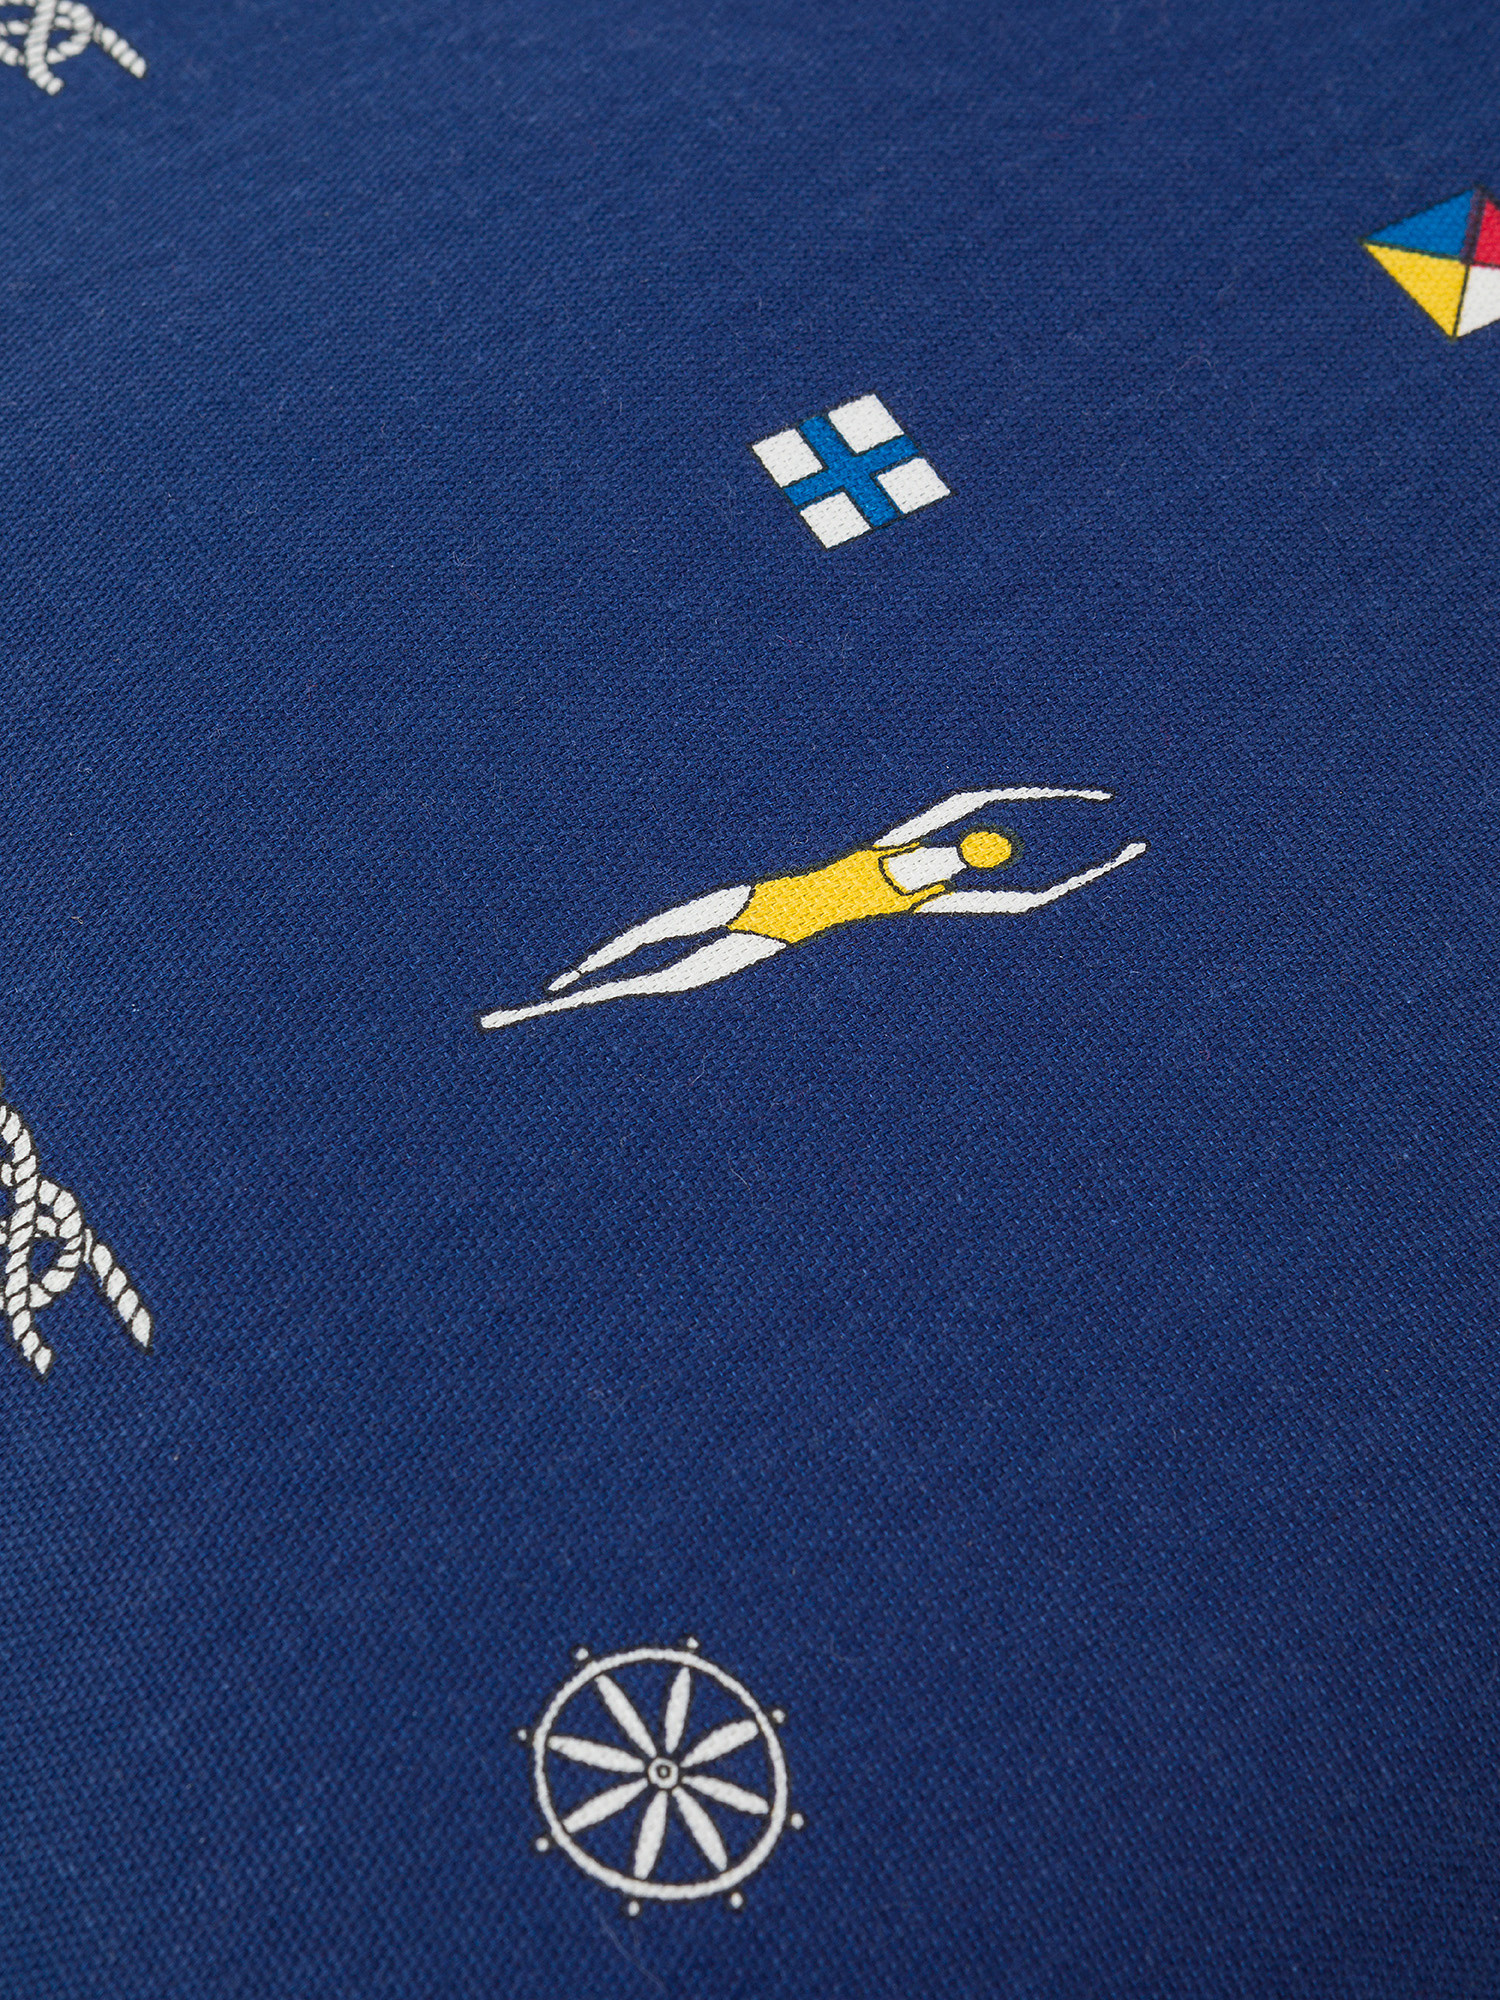 Cuscino cotone stampa bandiere nautiche 45x45cm, Blu, large image number 2